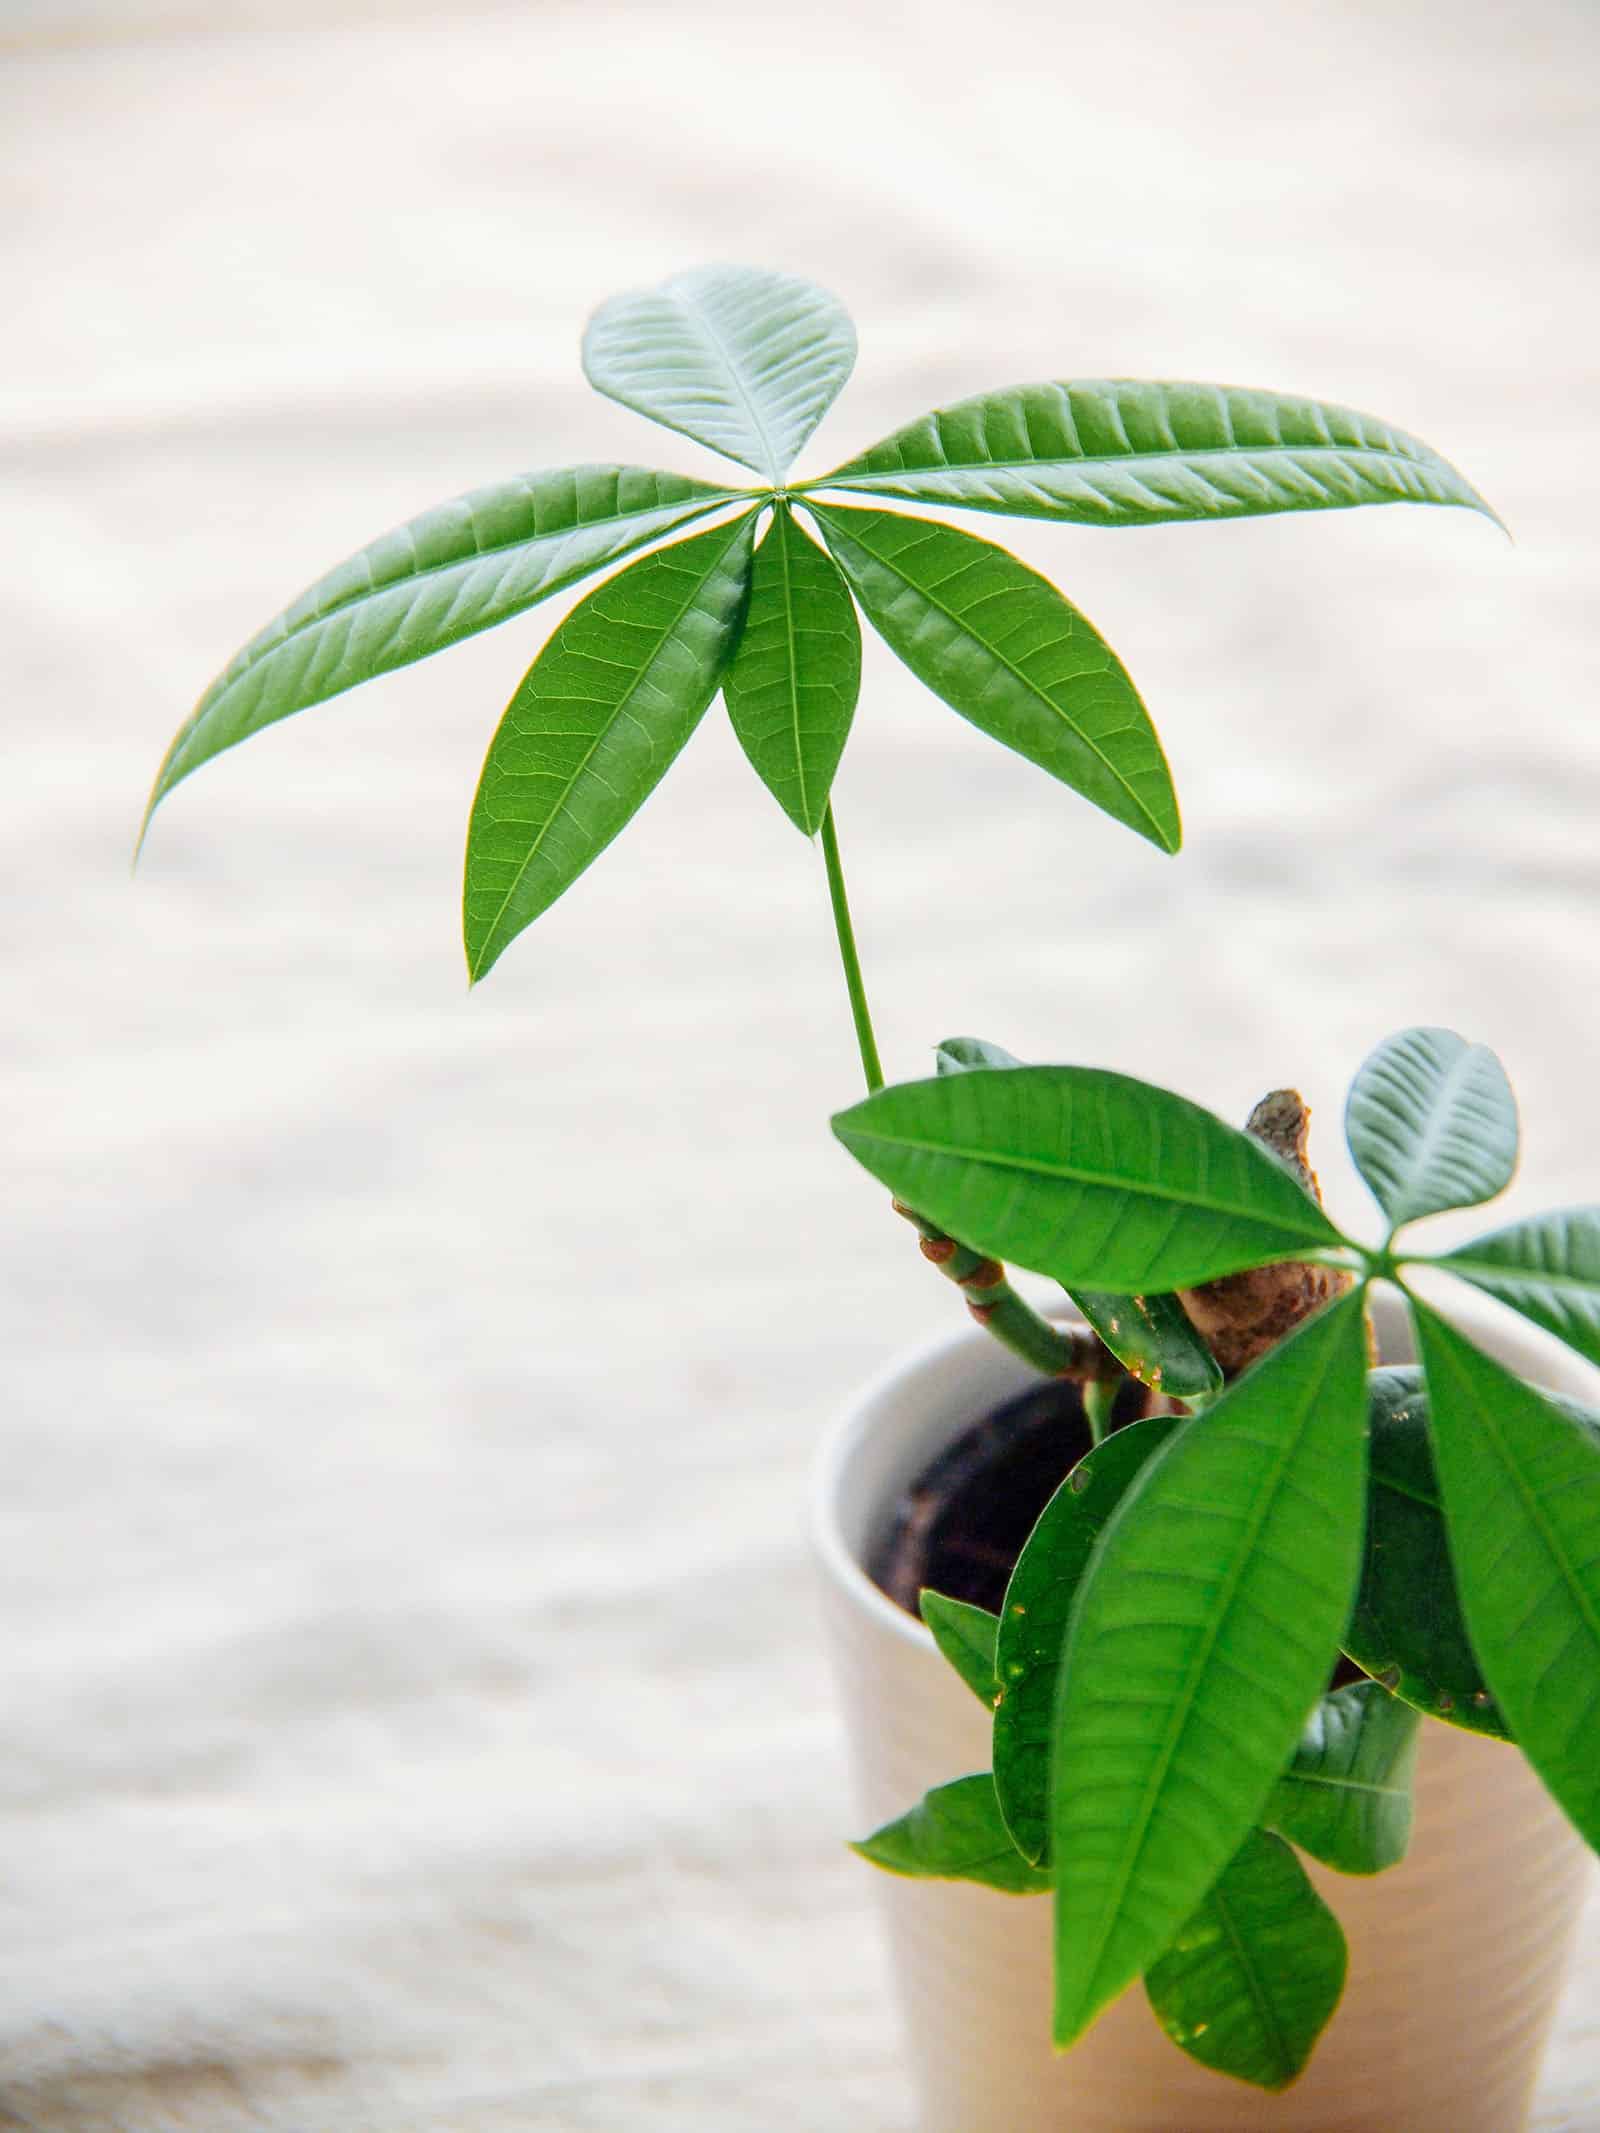 Young Pachira aquatica plant in a white pot